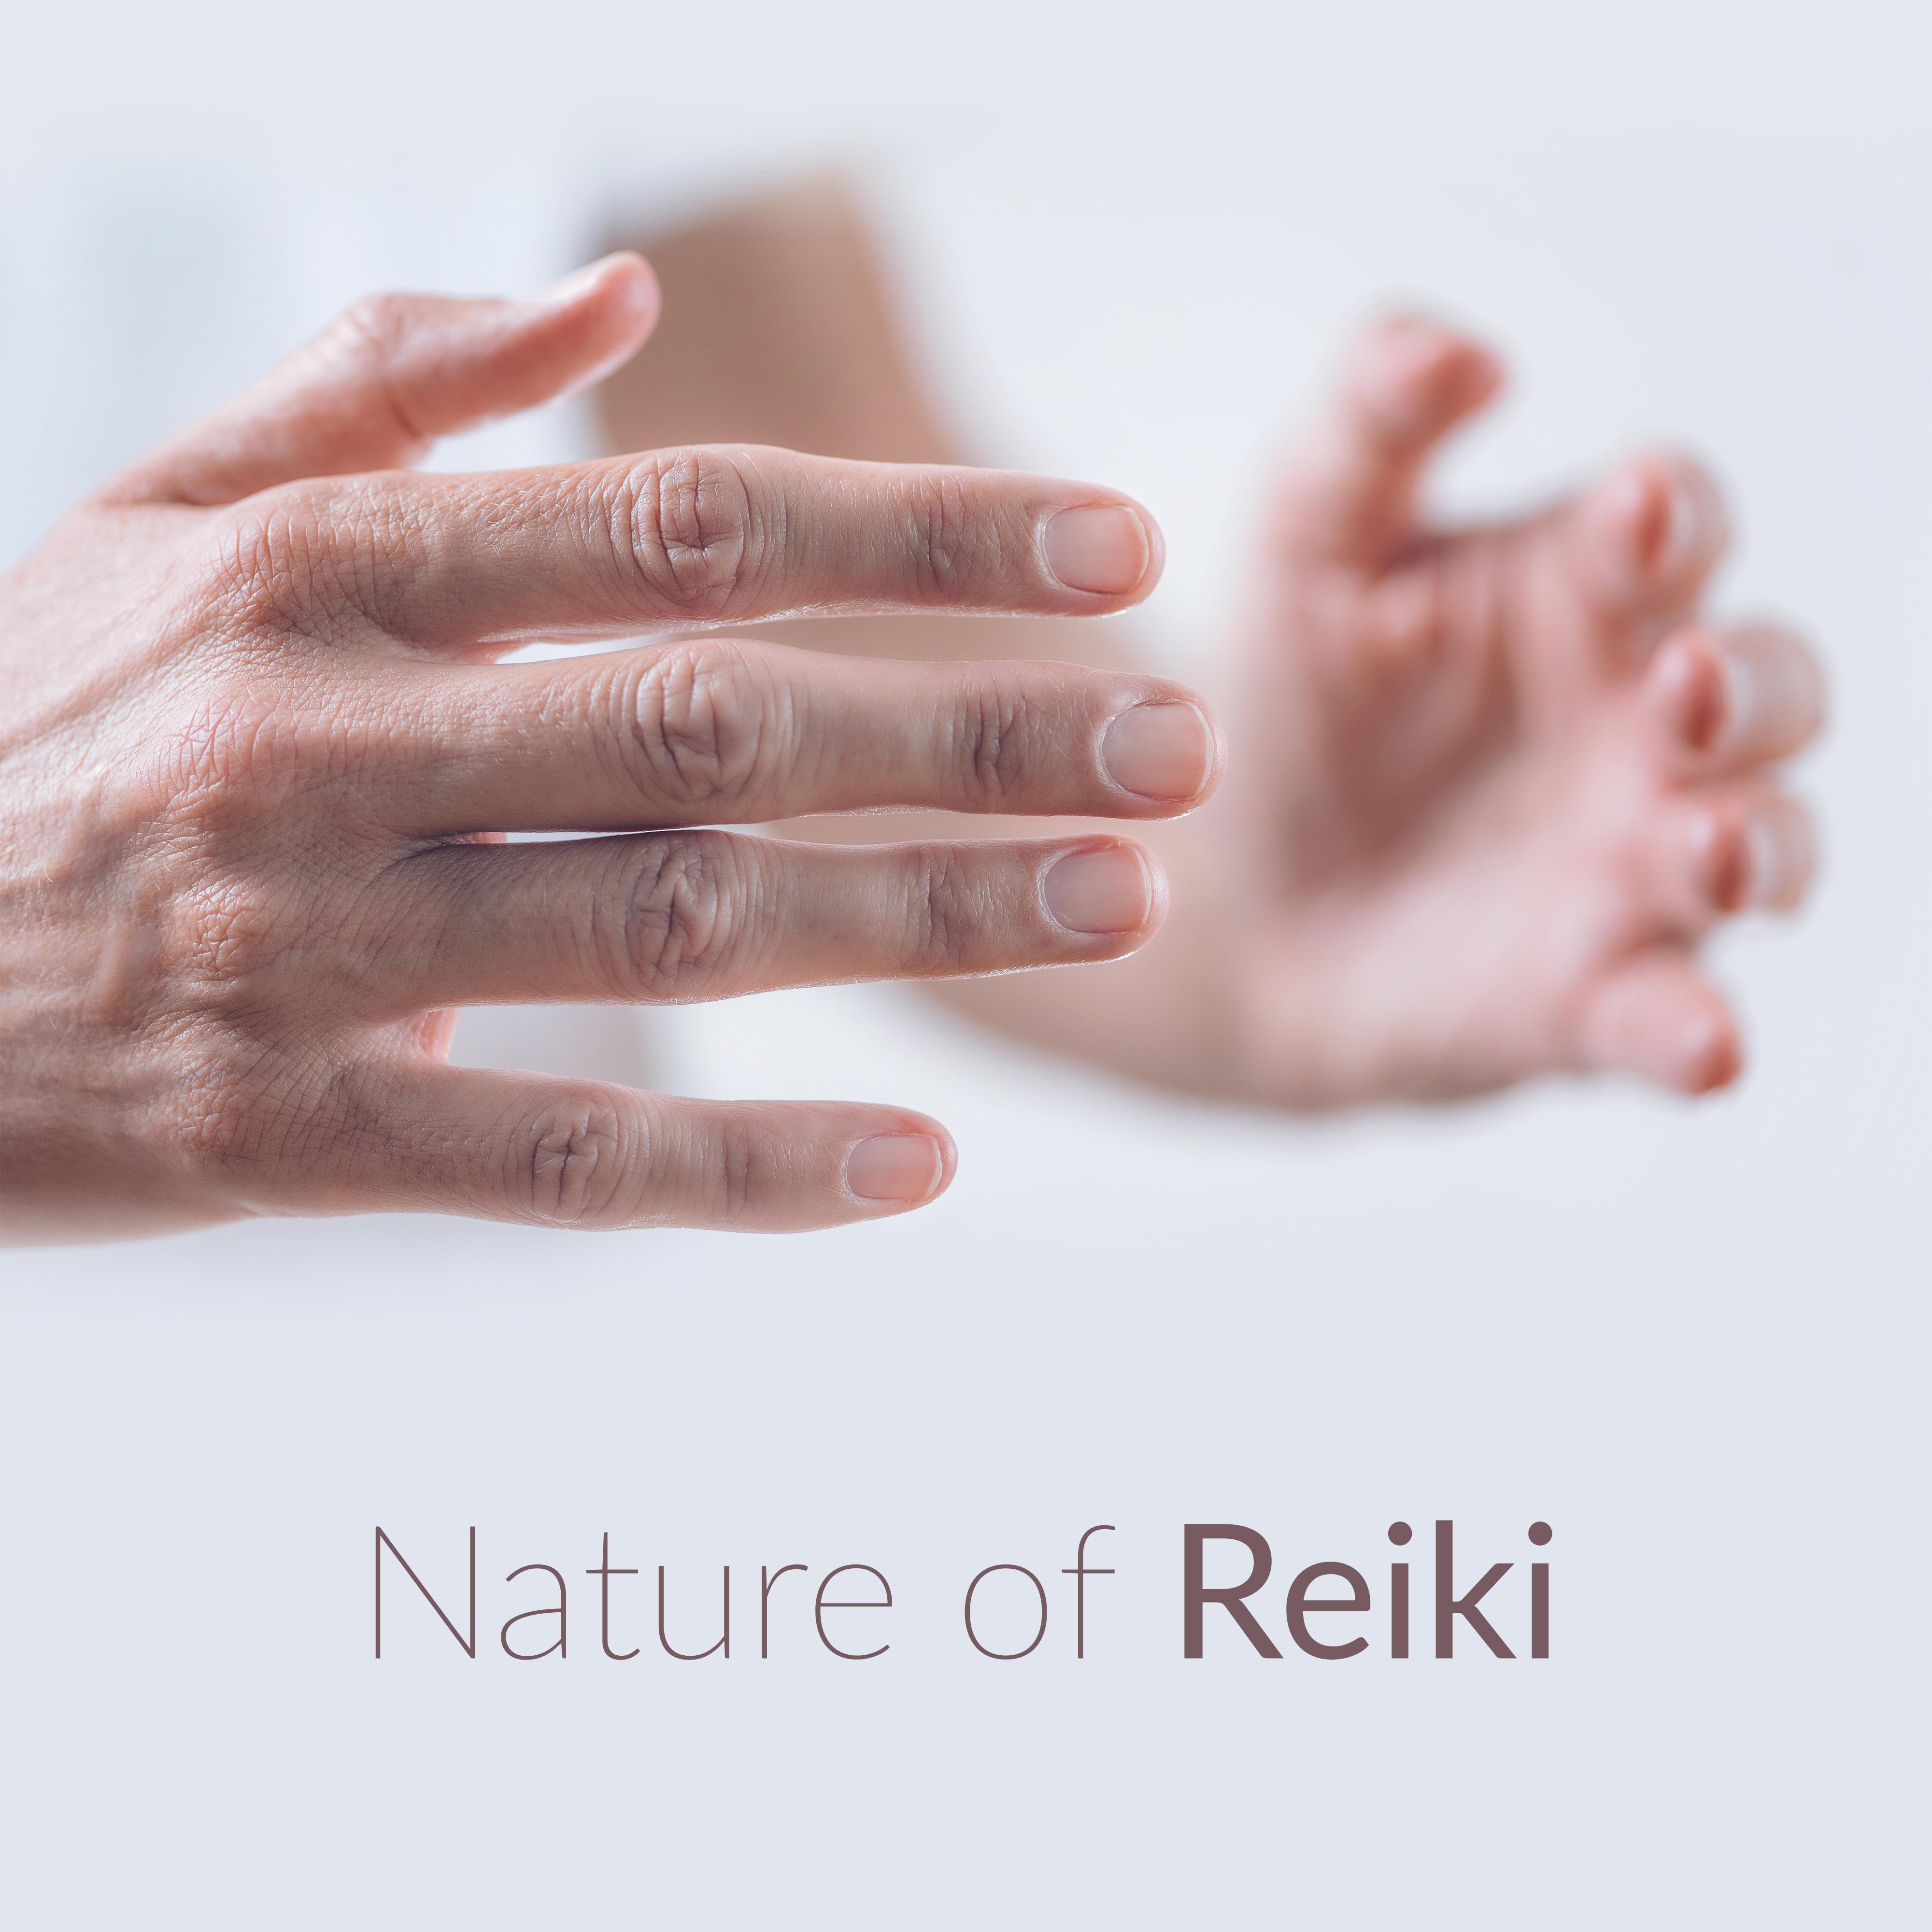 Nature of Reiki - Universal Musical Therapy Using Reiki Power and Energy